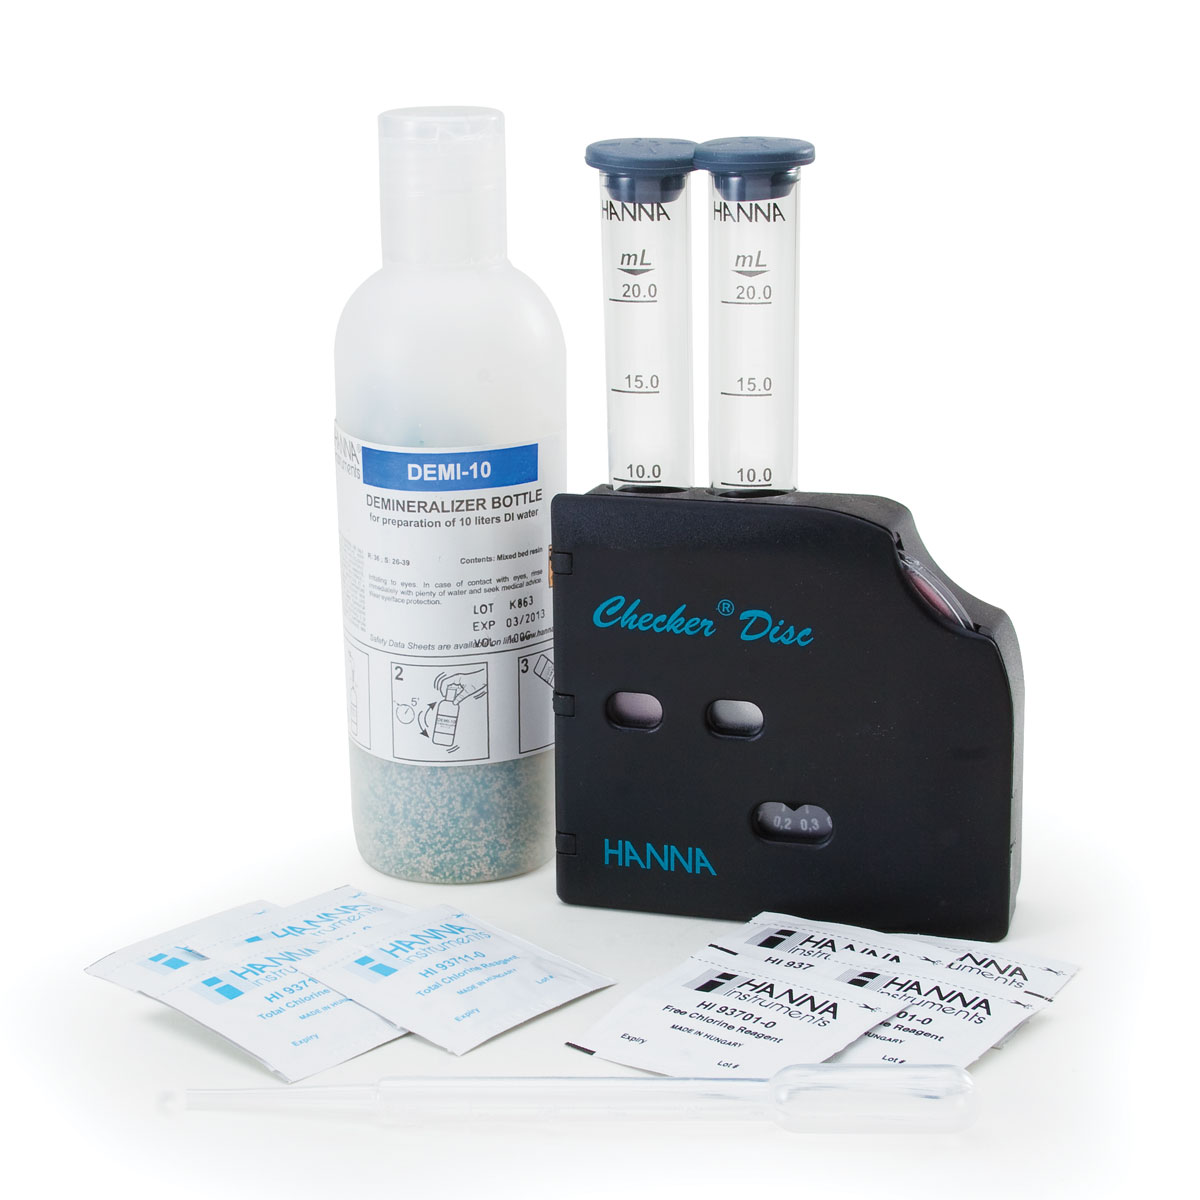 HI38017 Free and Total Chlorine Low and Medium Range Test Kit